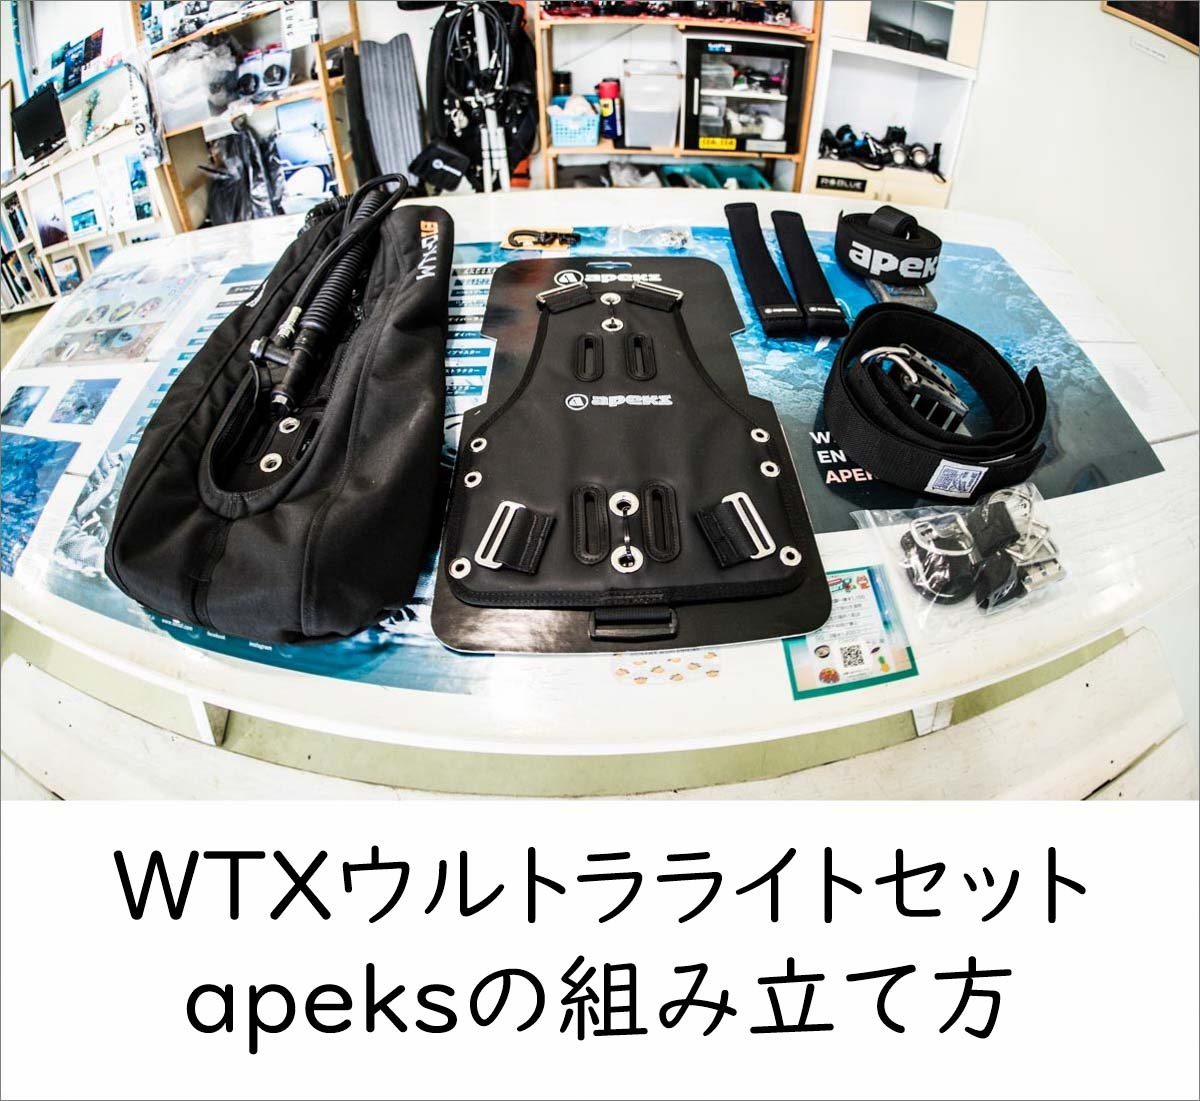 Apeks(エイペックス)正規販売店 - テクニカルダイビング器材